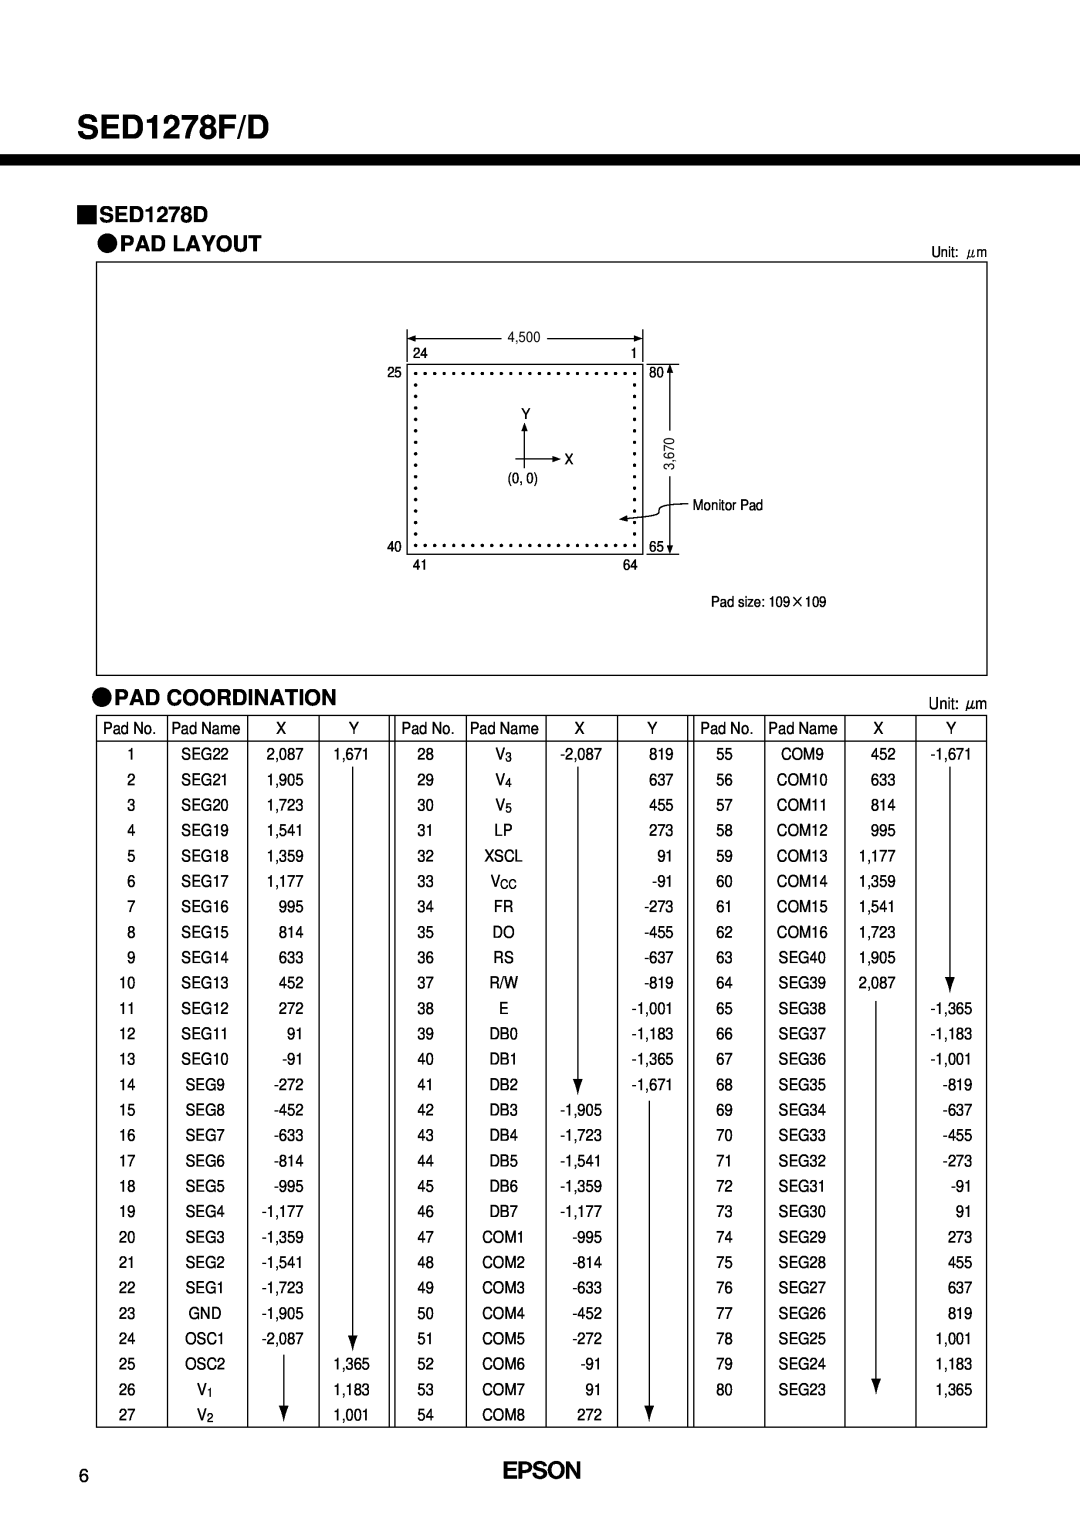 Epson SED1278F/D manual SED1278D PAD LAYOUT, Pad Coordination, 3,670 